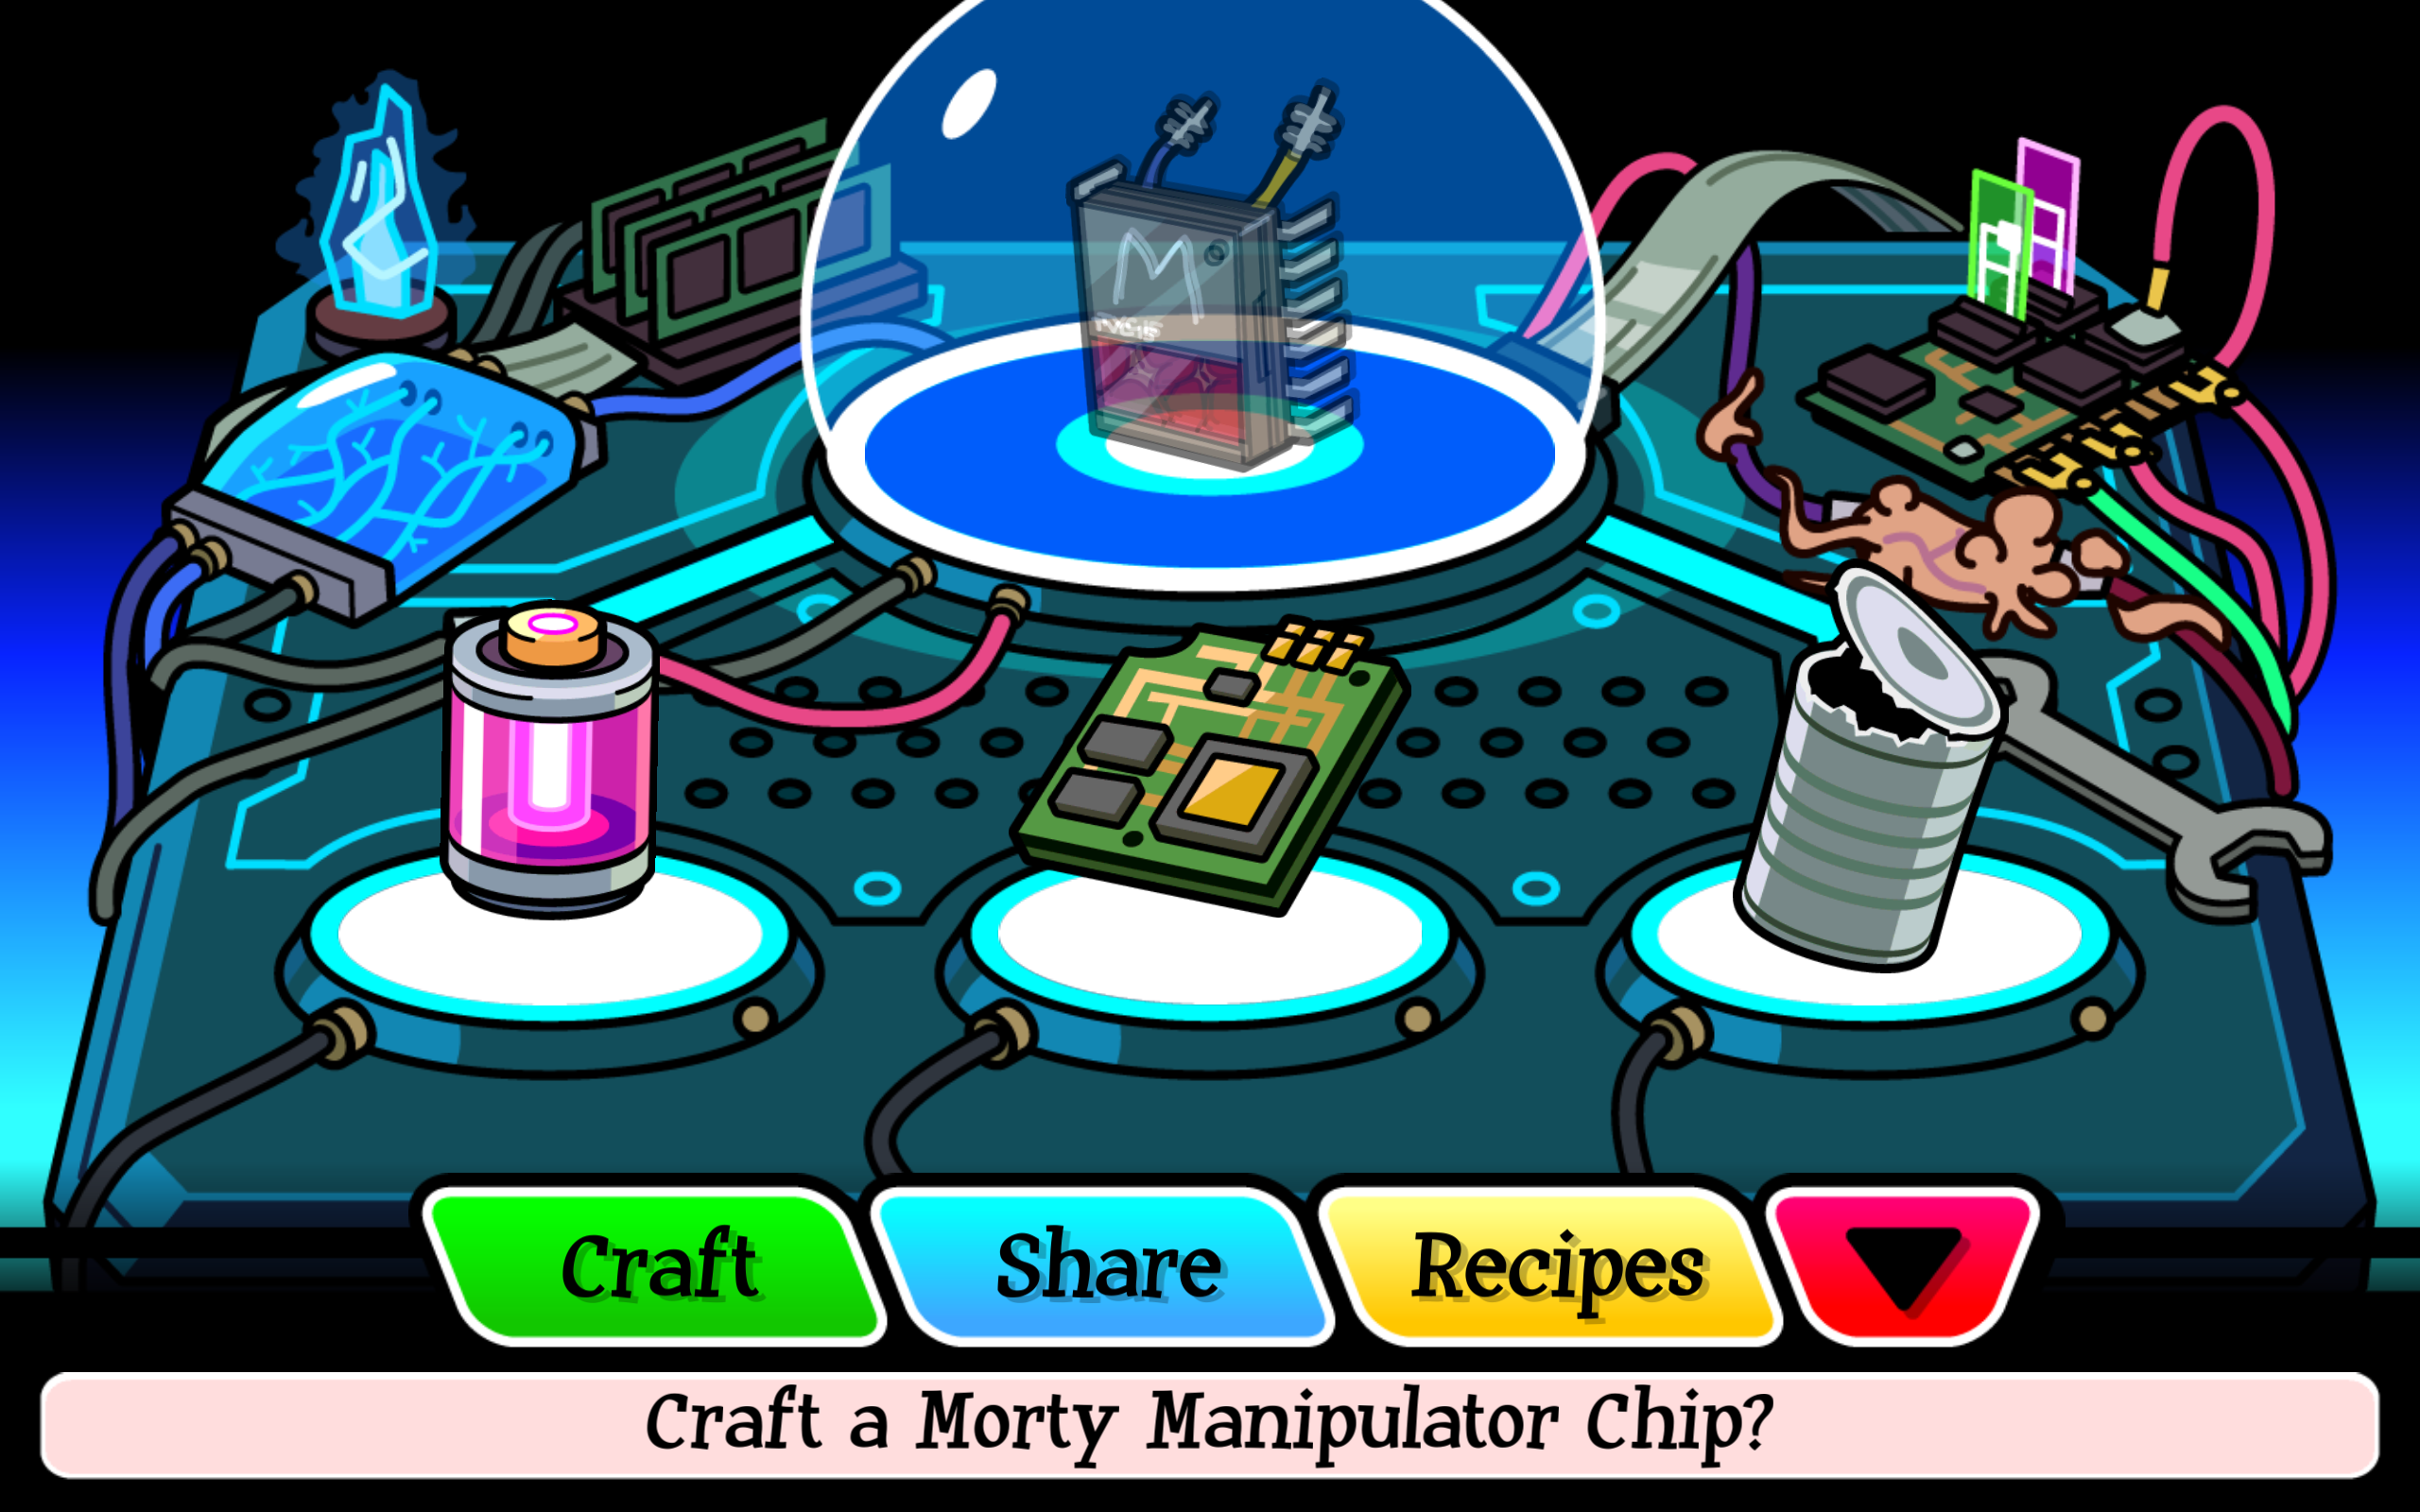 1. Morty Manipulator Chip